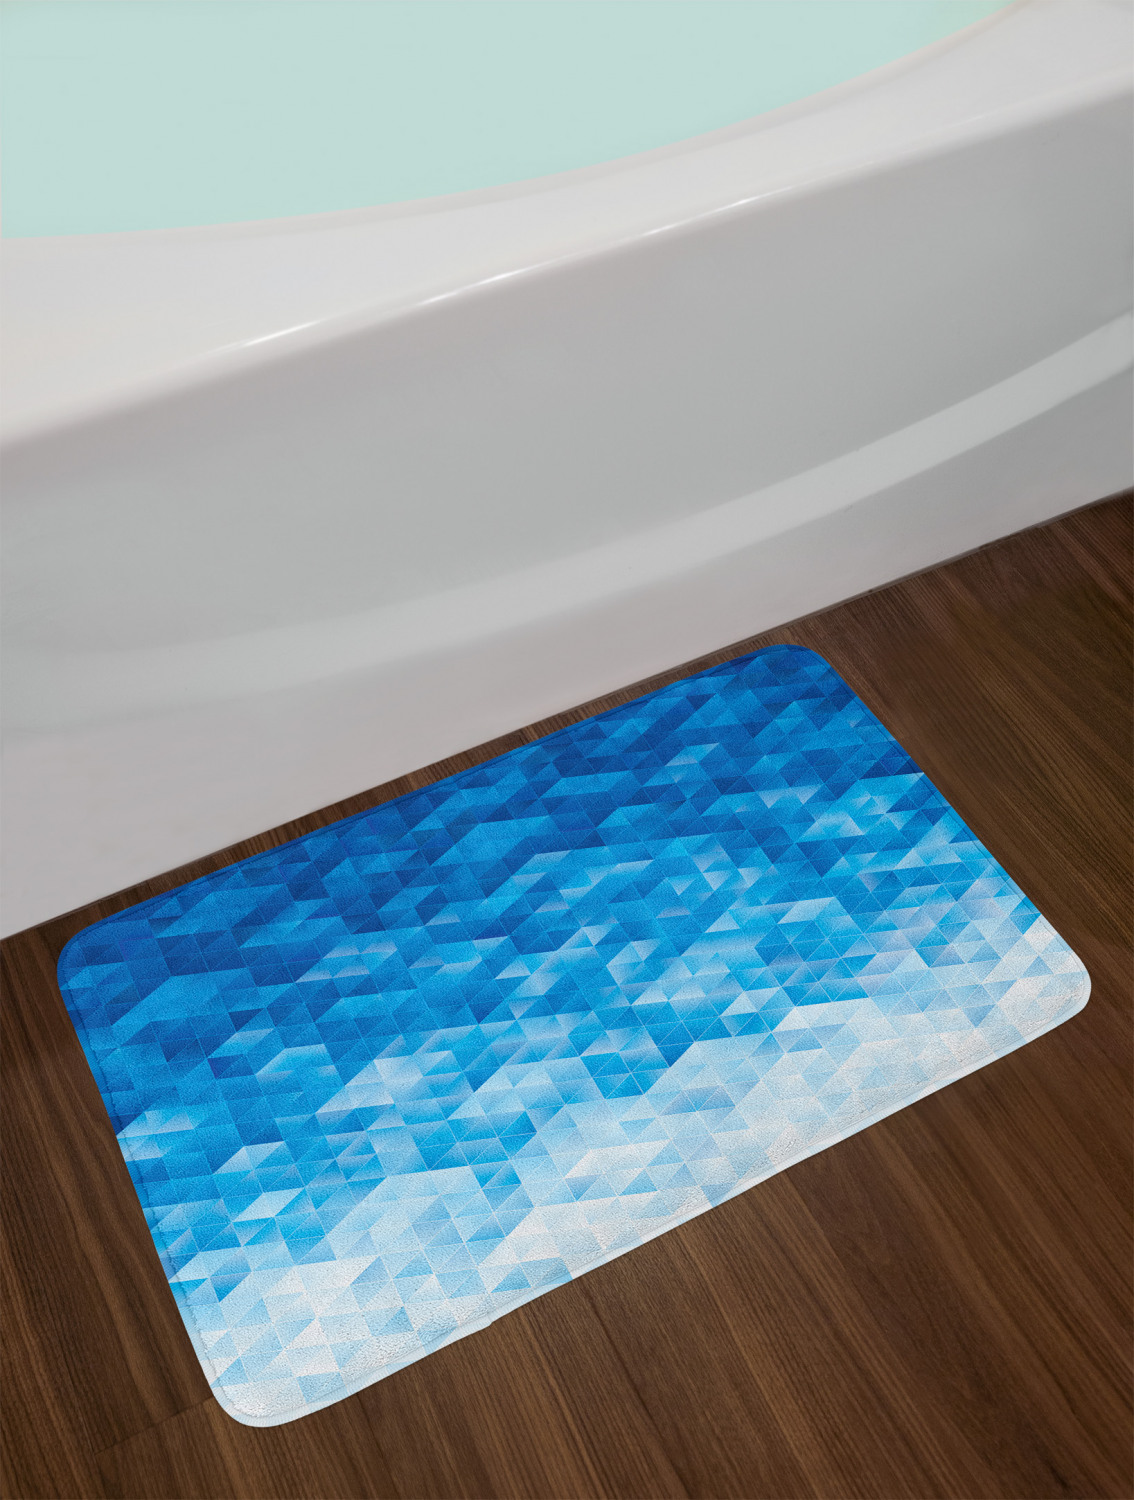 Geometric Bath Mat, Geometric Gradient Digital Texture with Mosaic Triangle Pixel Graphic Print Art, Non-Slip Plush Mat Bathroom Kitchen Laundry Room Decor, 29.5 X 17.5 Inches, Pale Blue, Ambesonne - image 2 of 2